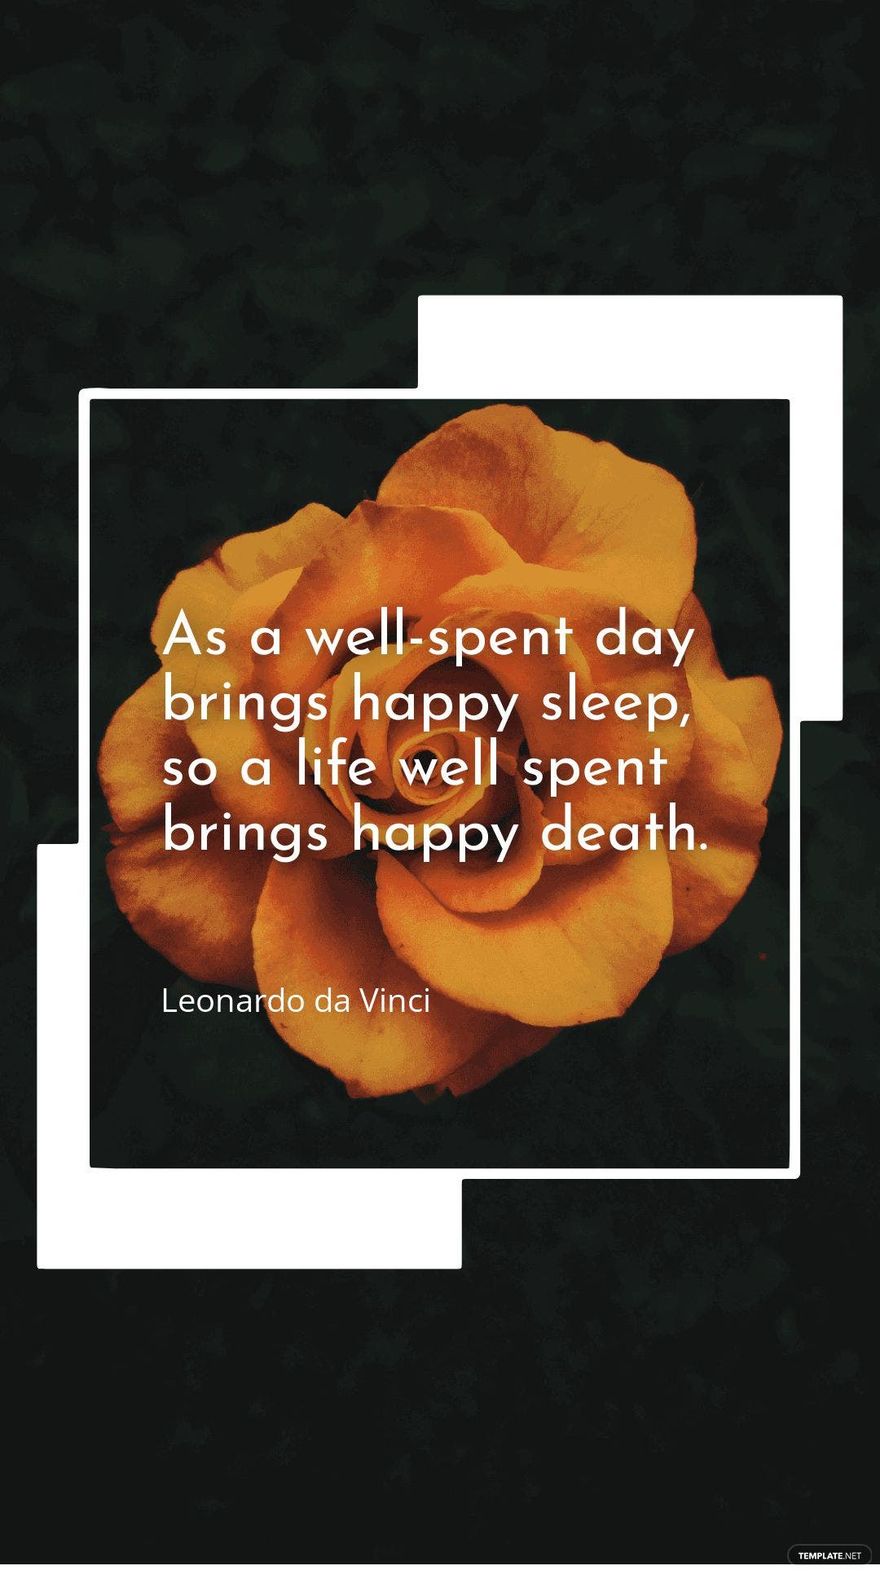 Leonardo da Vinci - "As a well-spent day brings happy sleep, so a life well spent brings happy death."